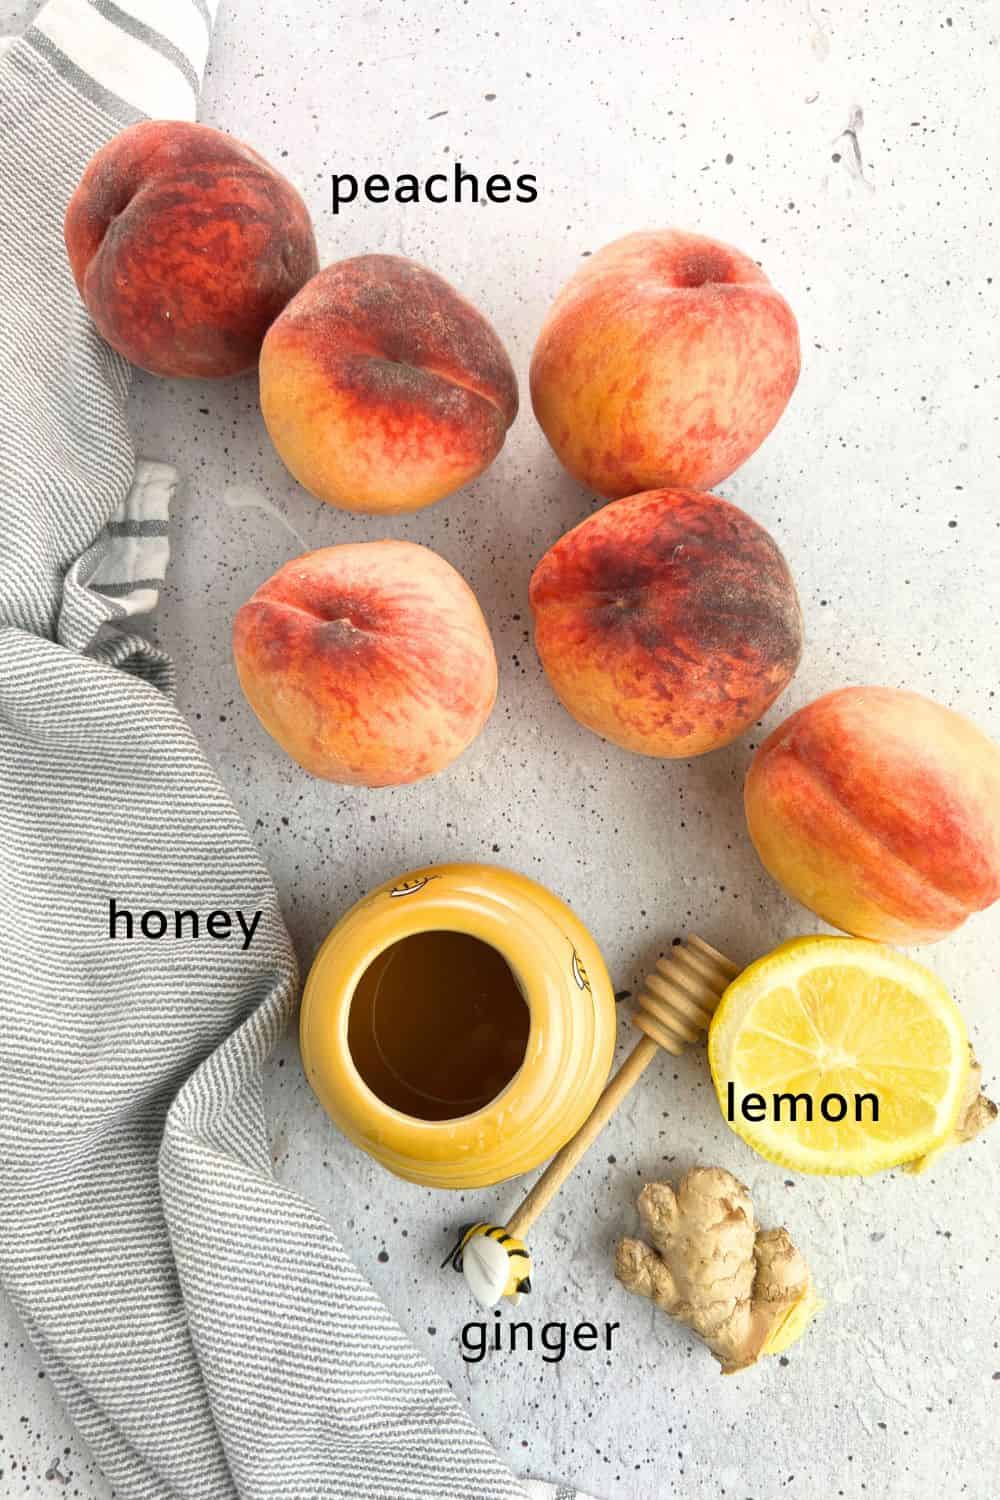 Labelled ingredients for peach ginger sorbet: peaches, honey, lemon and ginger.